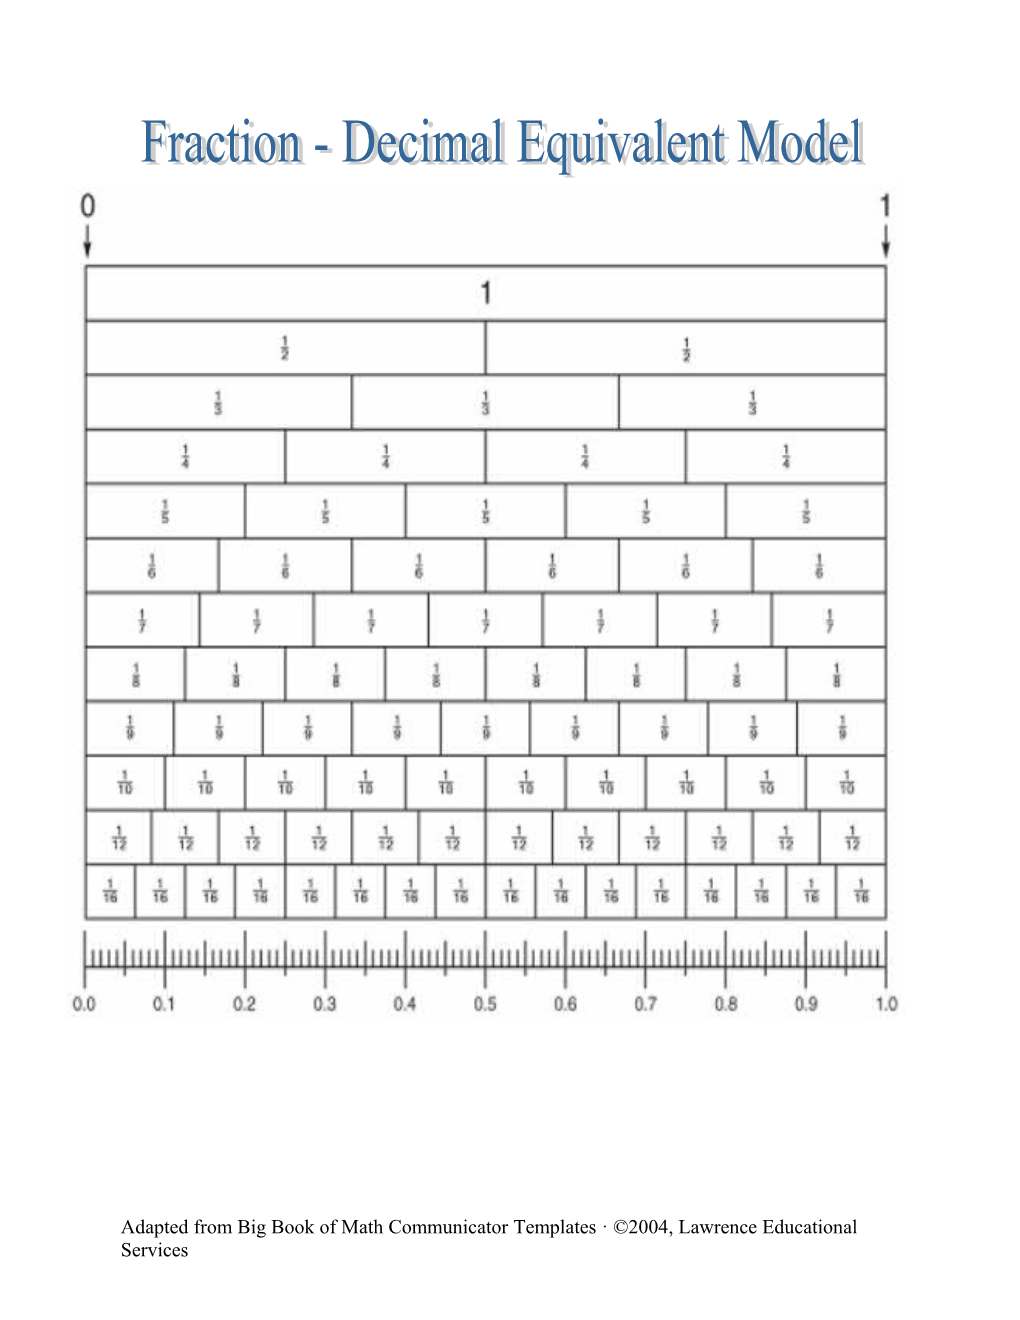 Fraction Decimal Equivalence Model